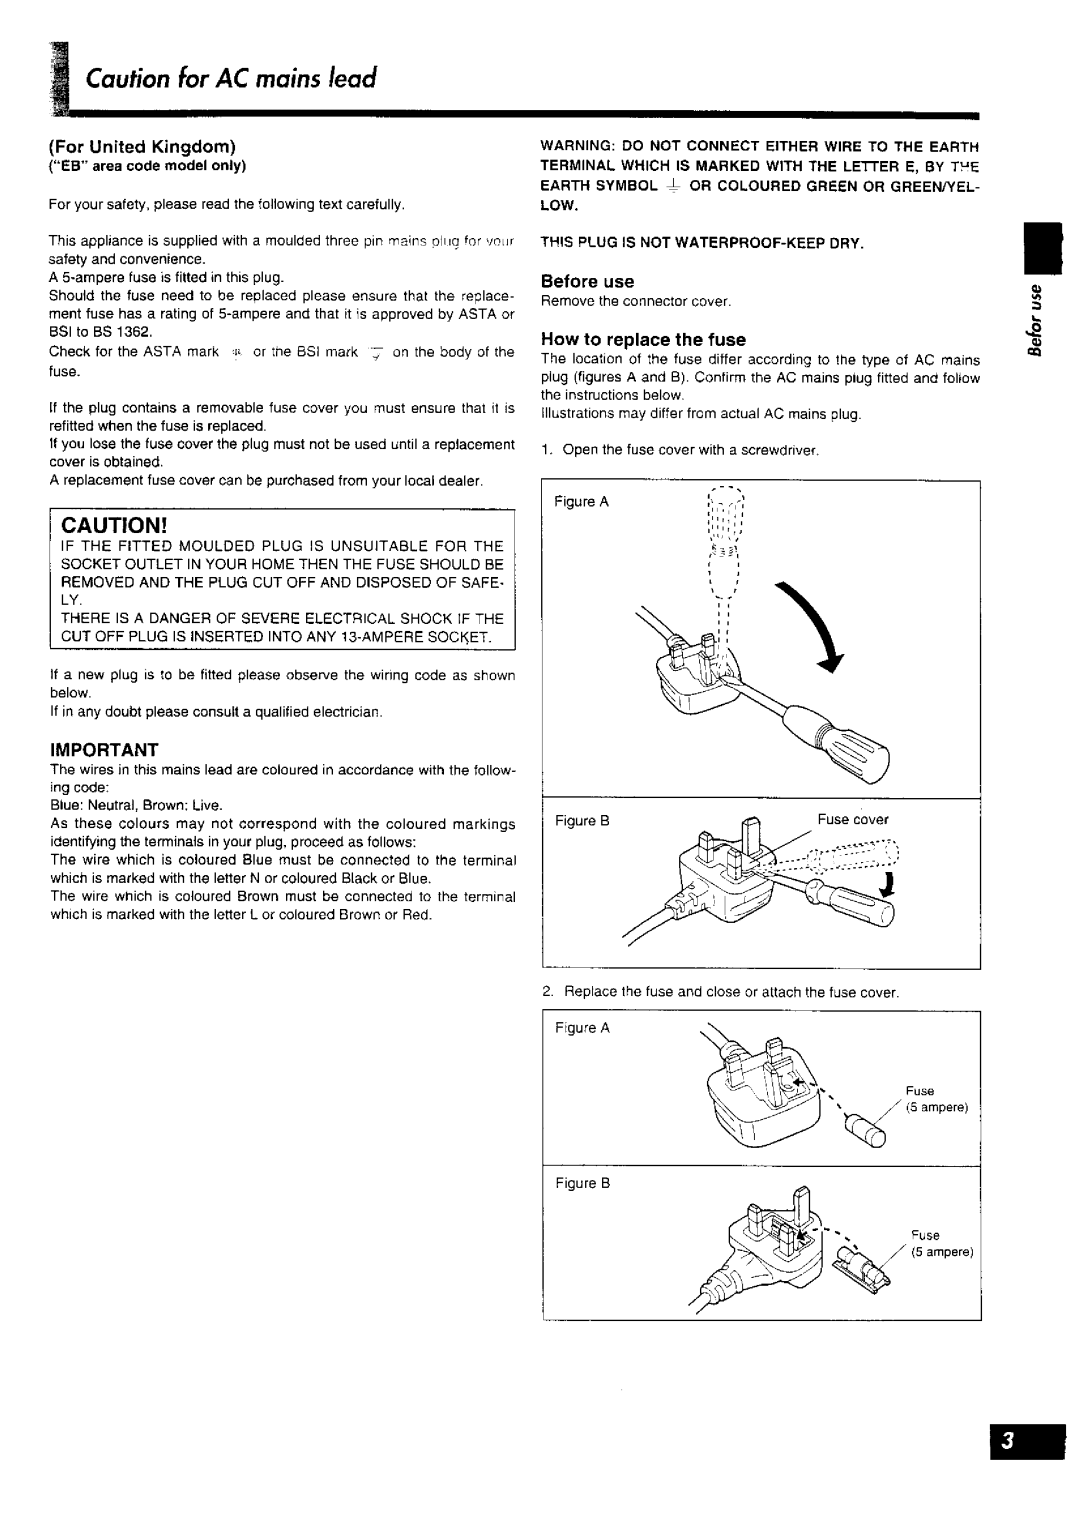 Technics RS-TR575M2 manual 